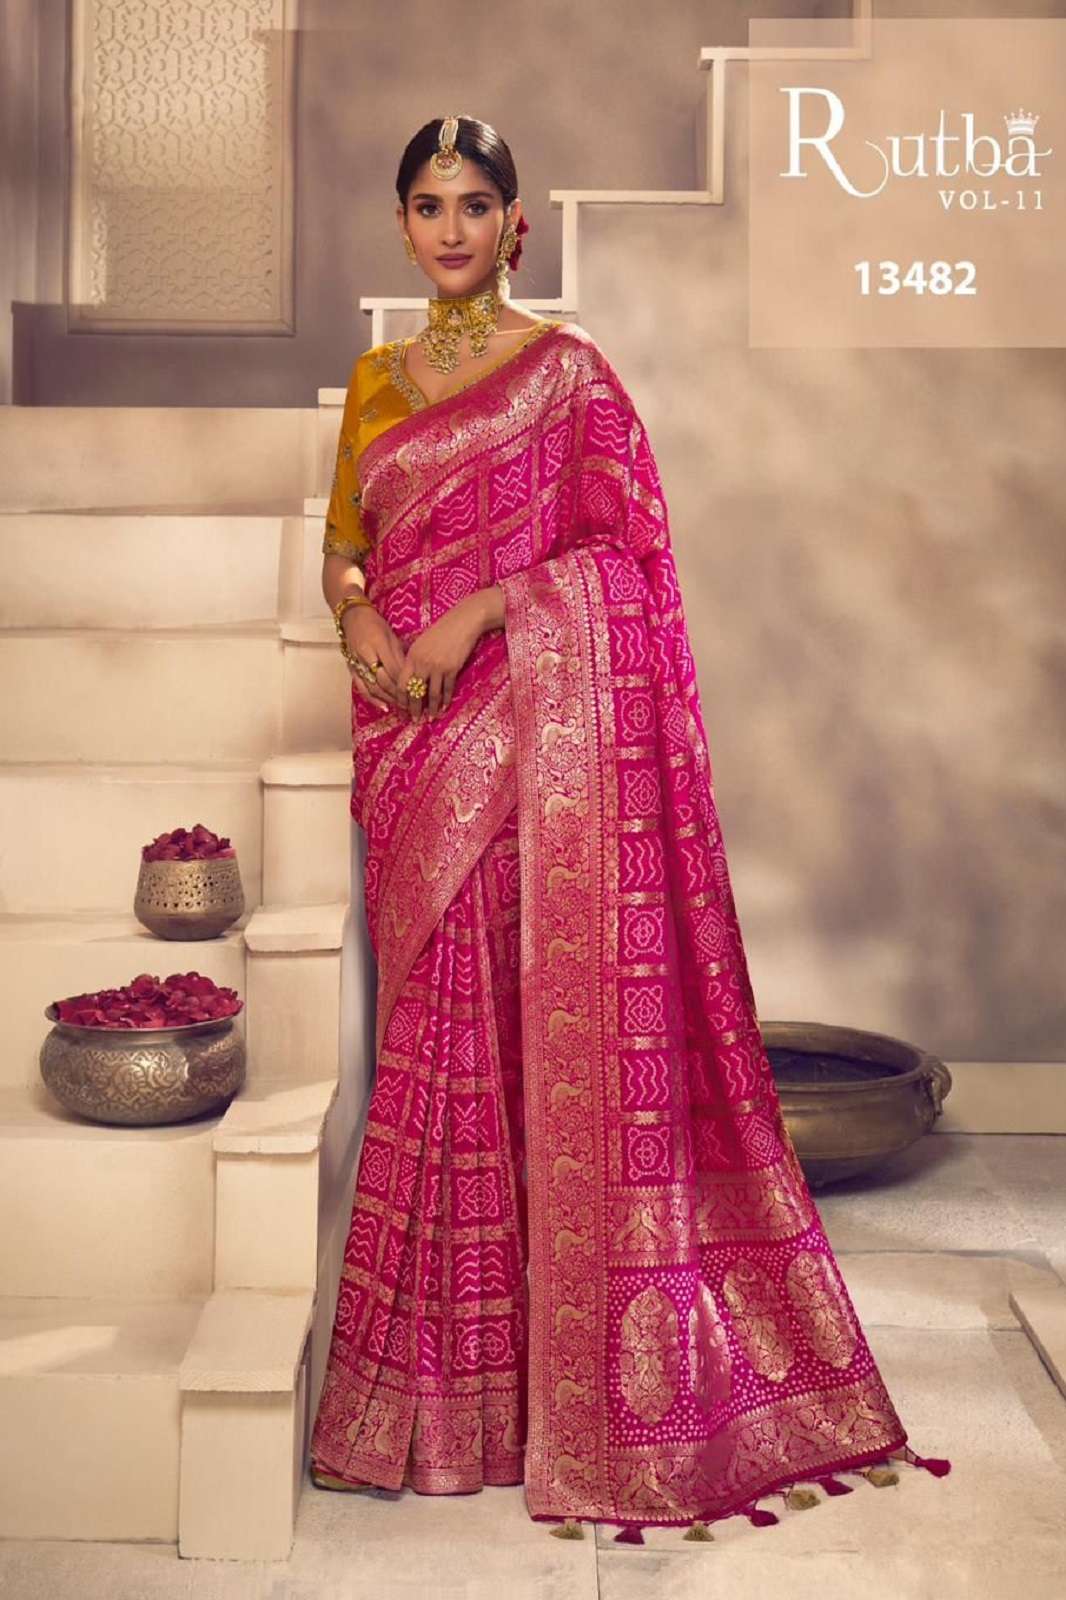 Royal Krishna Rutba Vol-11 Traditional Designer Party Festival & Wedding Wear Silk Saree Collection